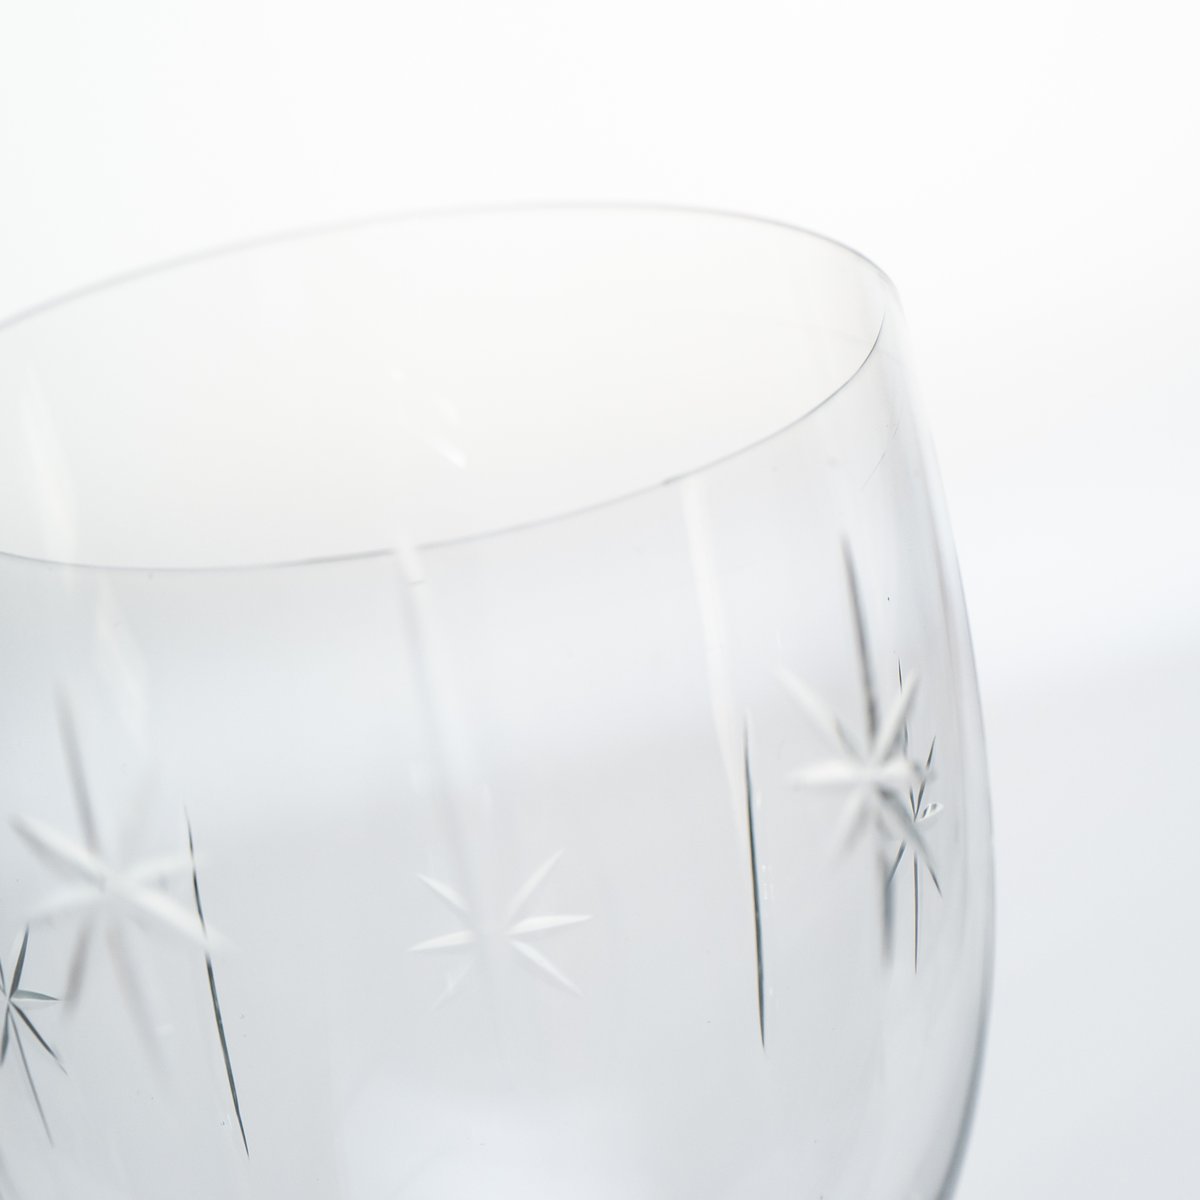 Iittala｜Venus｜wine glass | lumikka online shop